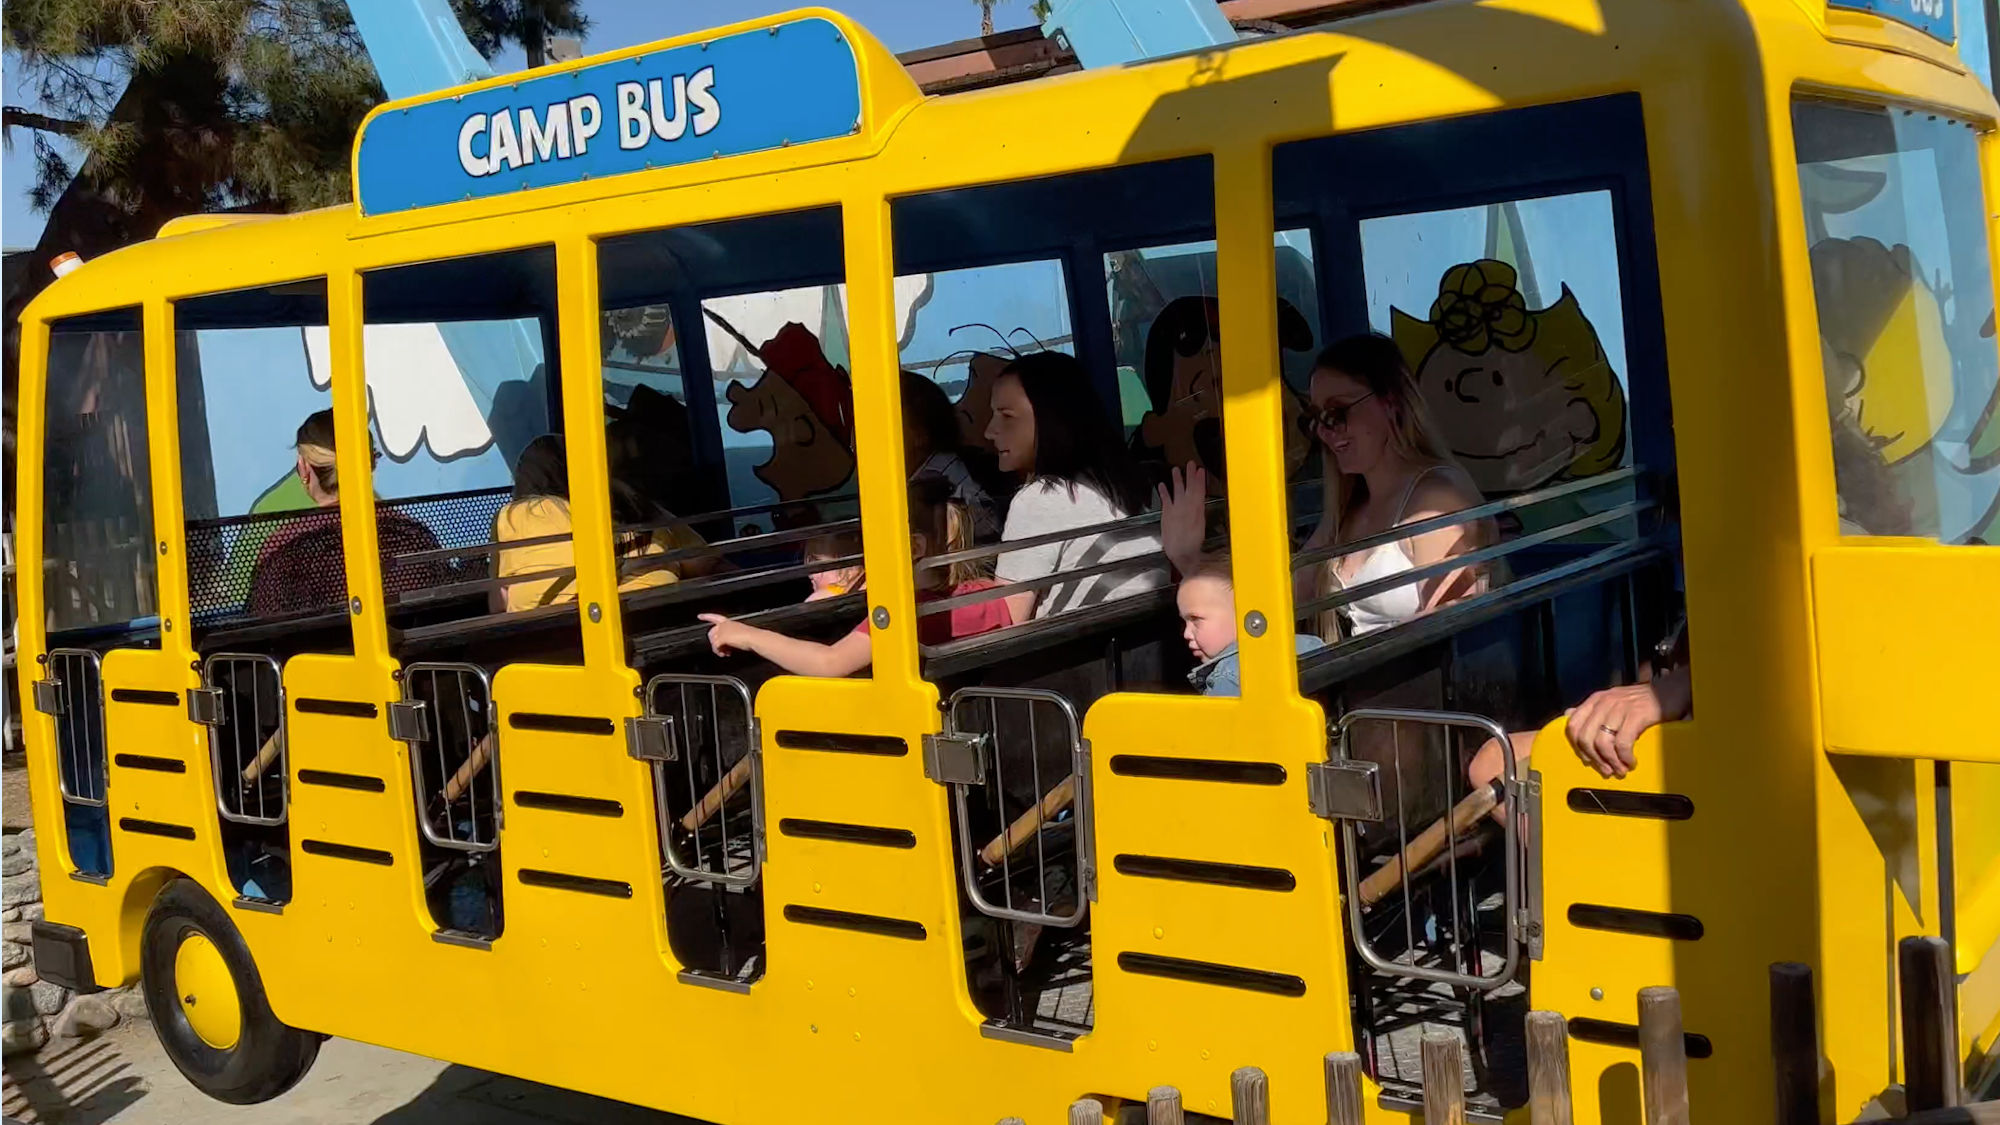 Knott's Berry Farm Camp Bus